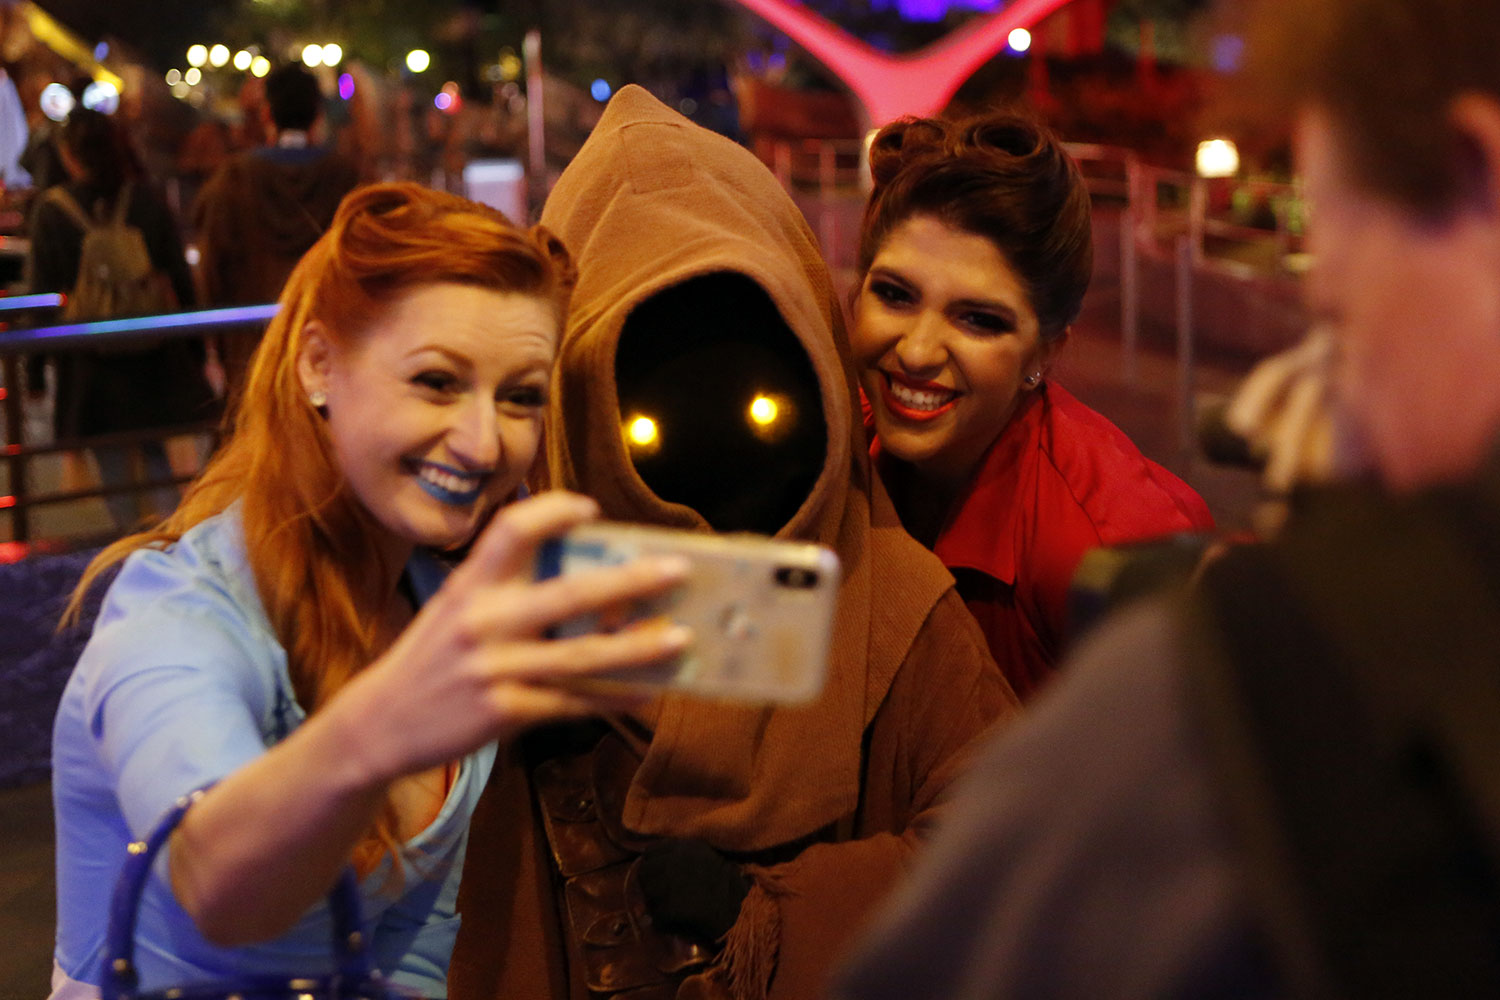 Photo Tour: Disneyland After Dark: Star Wars Nite 1 : EndorExpress